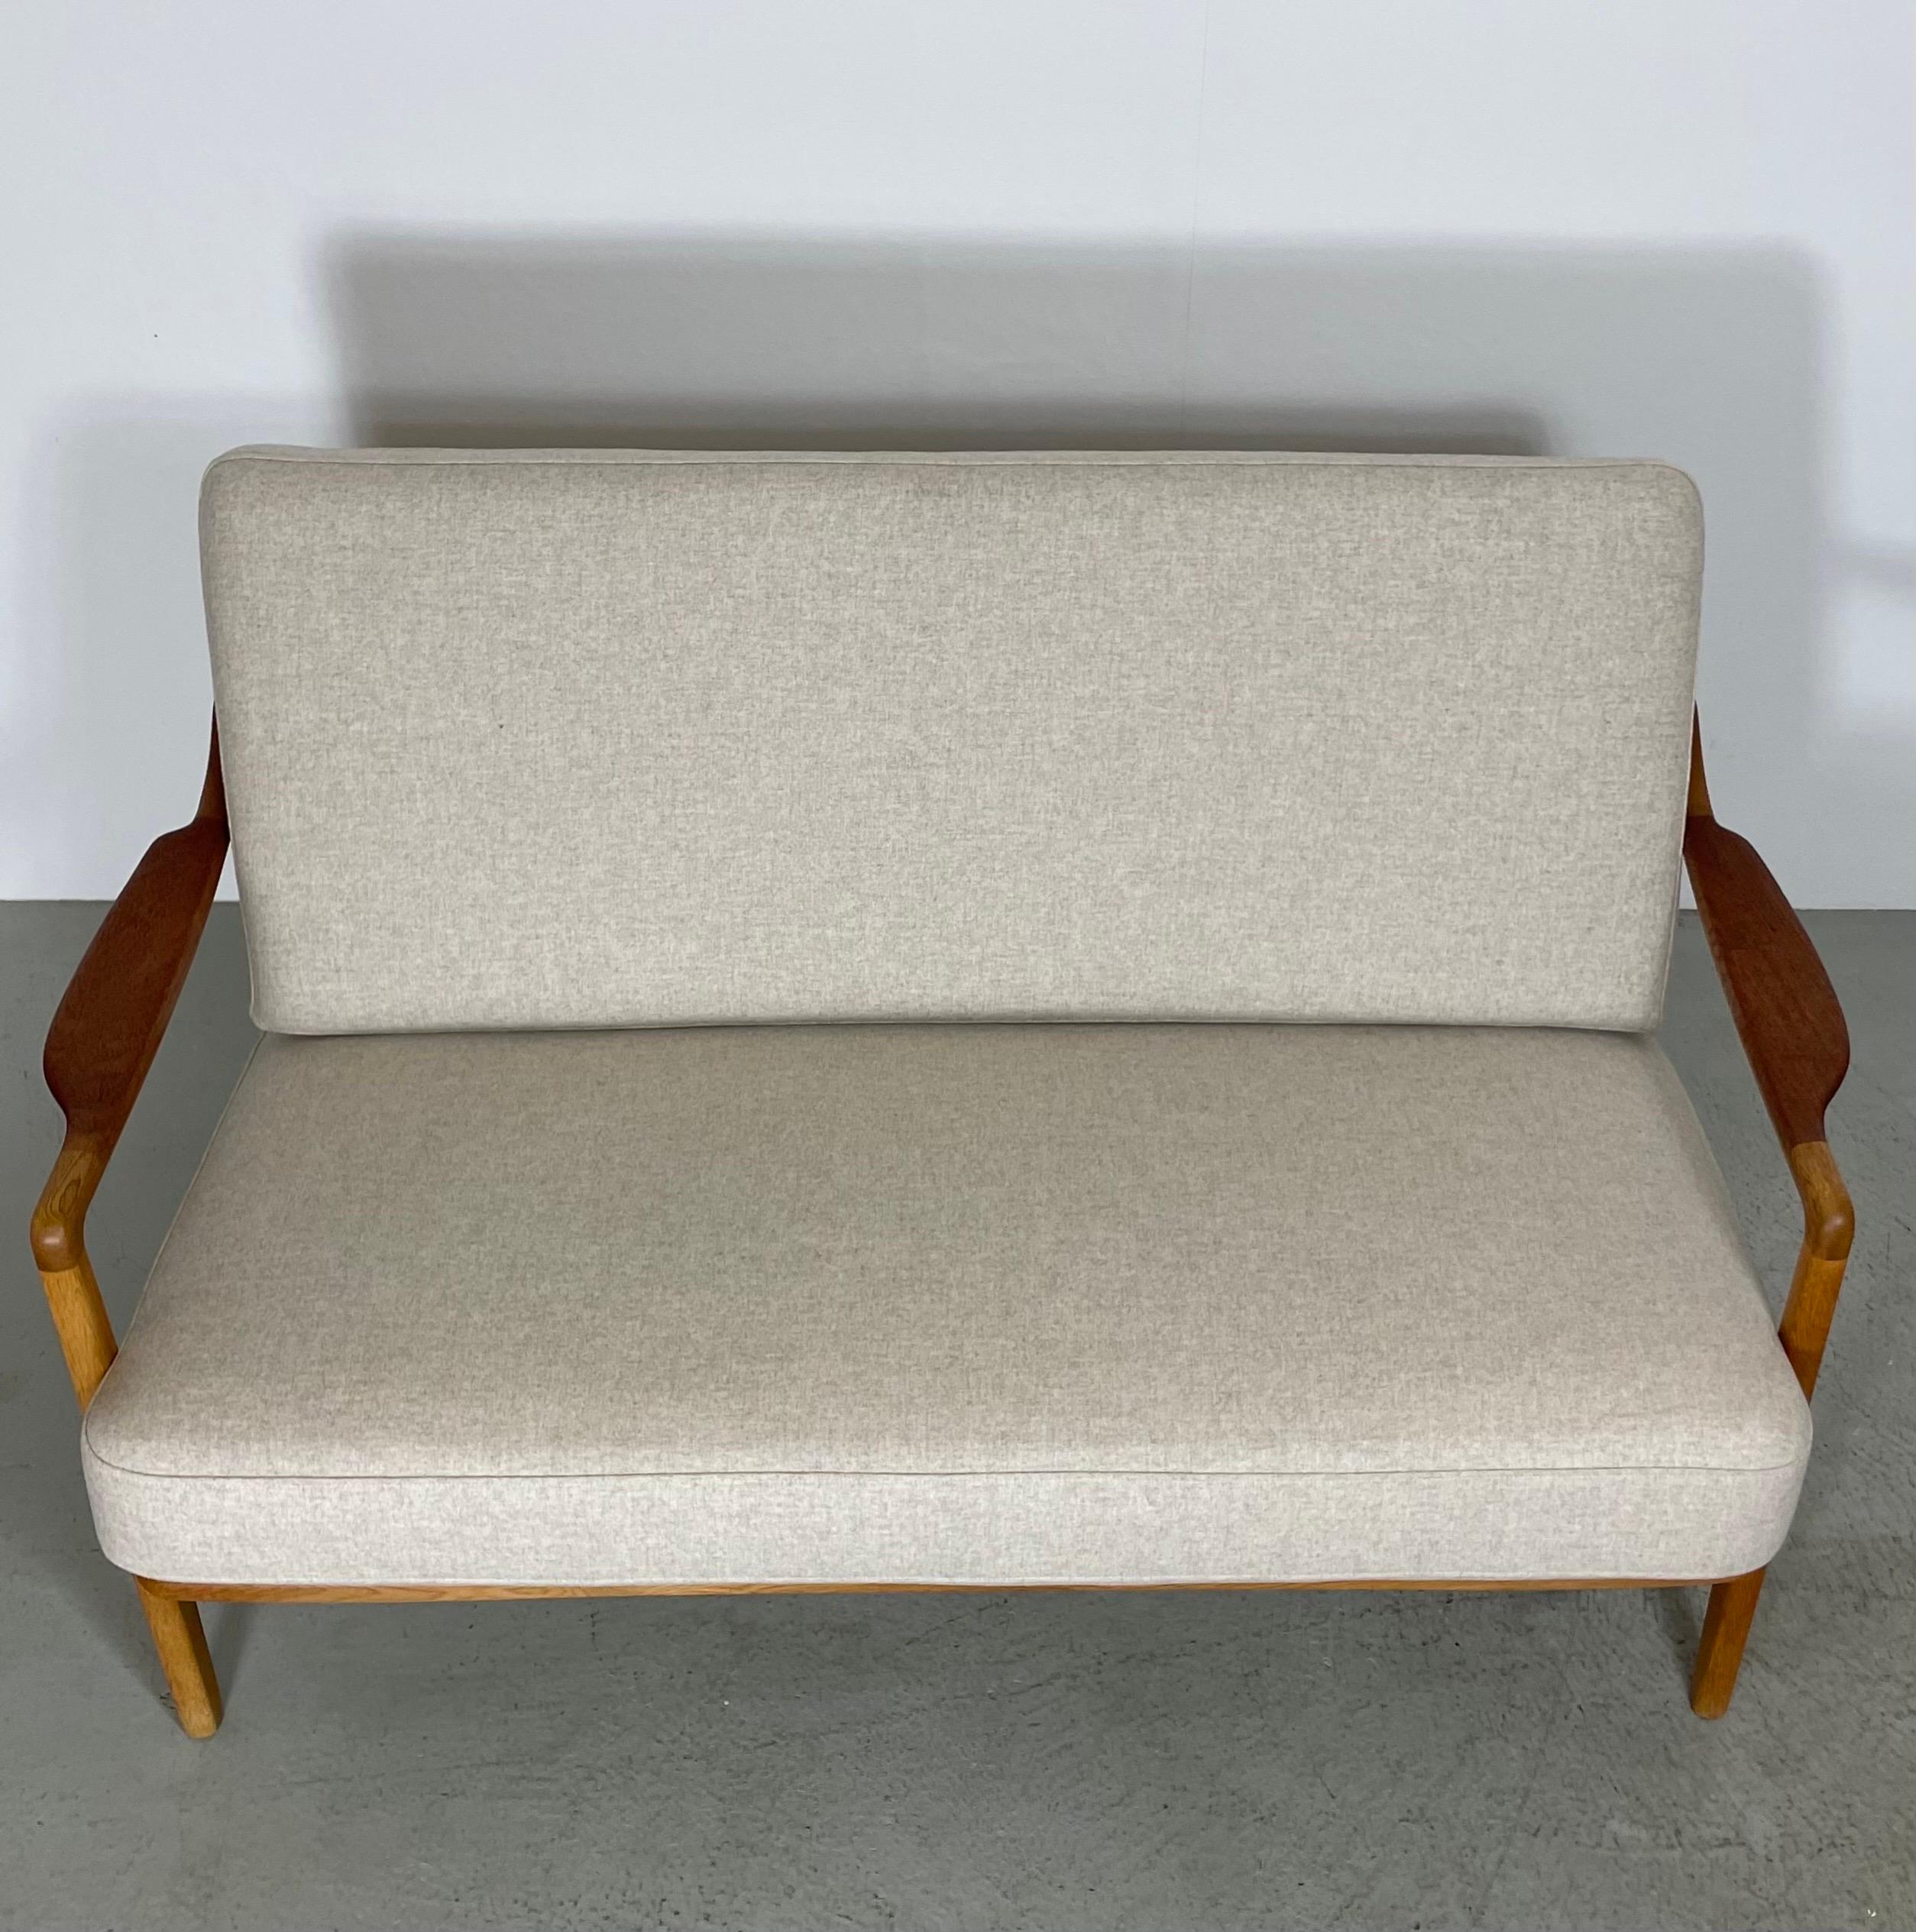  Danish Mid-Century Sofa by Tove & Edward Kindt-Larsen, Denmark 1950s For Sale 6